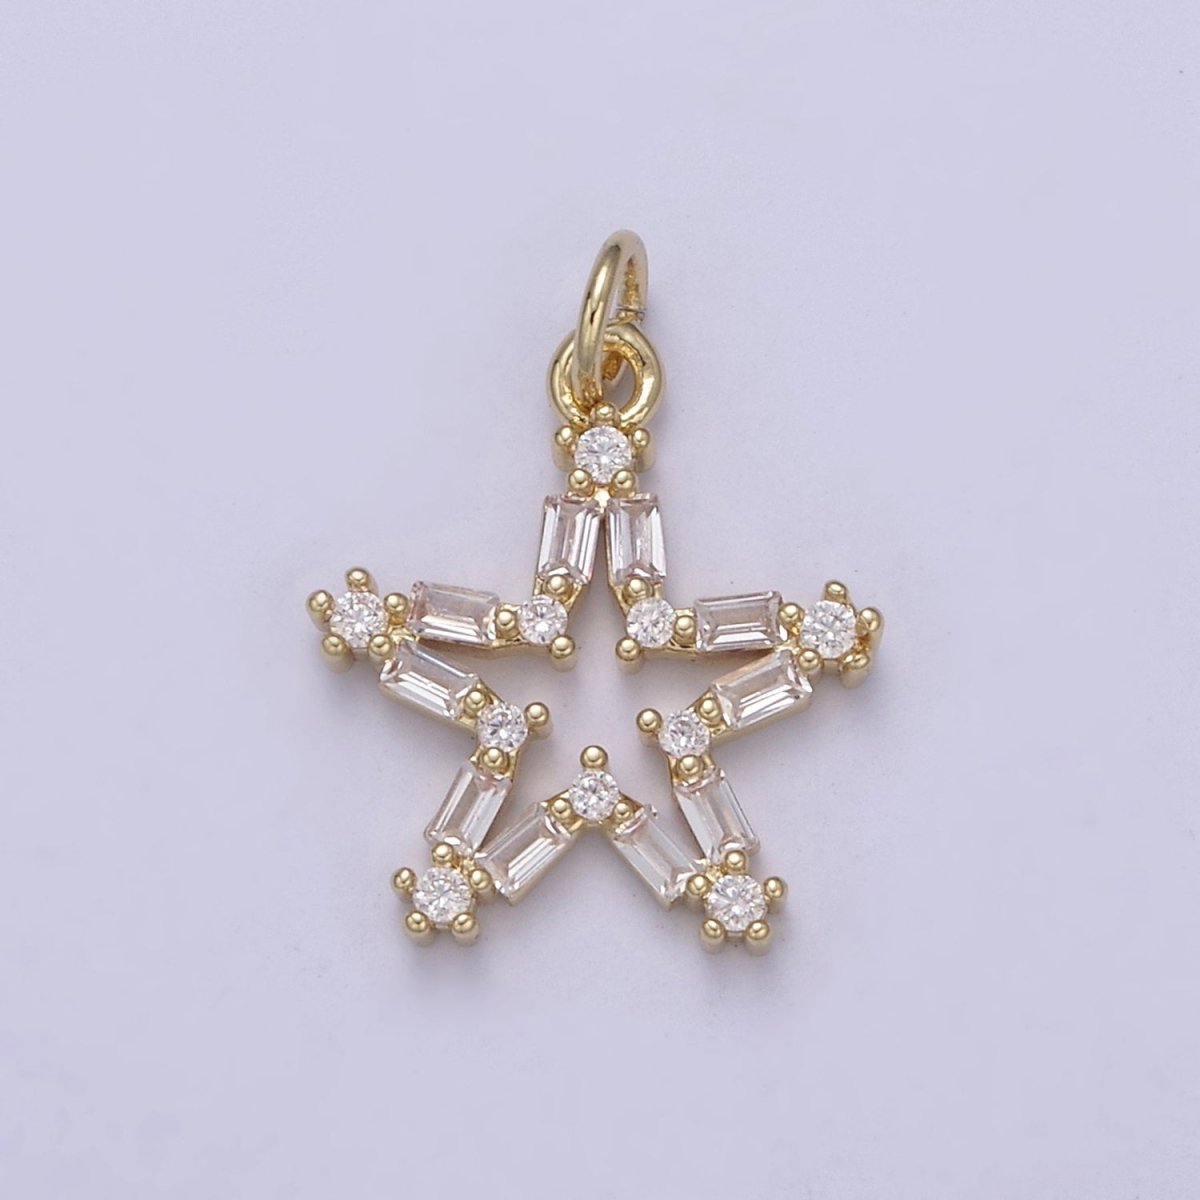 Tiny CZ Bright Stars Cubic Zirconia Small Starburst North Star Pendant - Gold Filled CZ Drop Charm Pendant, Celestial Jewelry, Pointed Stars N-421 - N-424 - DLUXCA